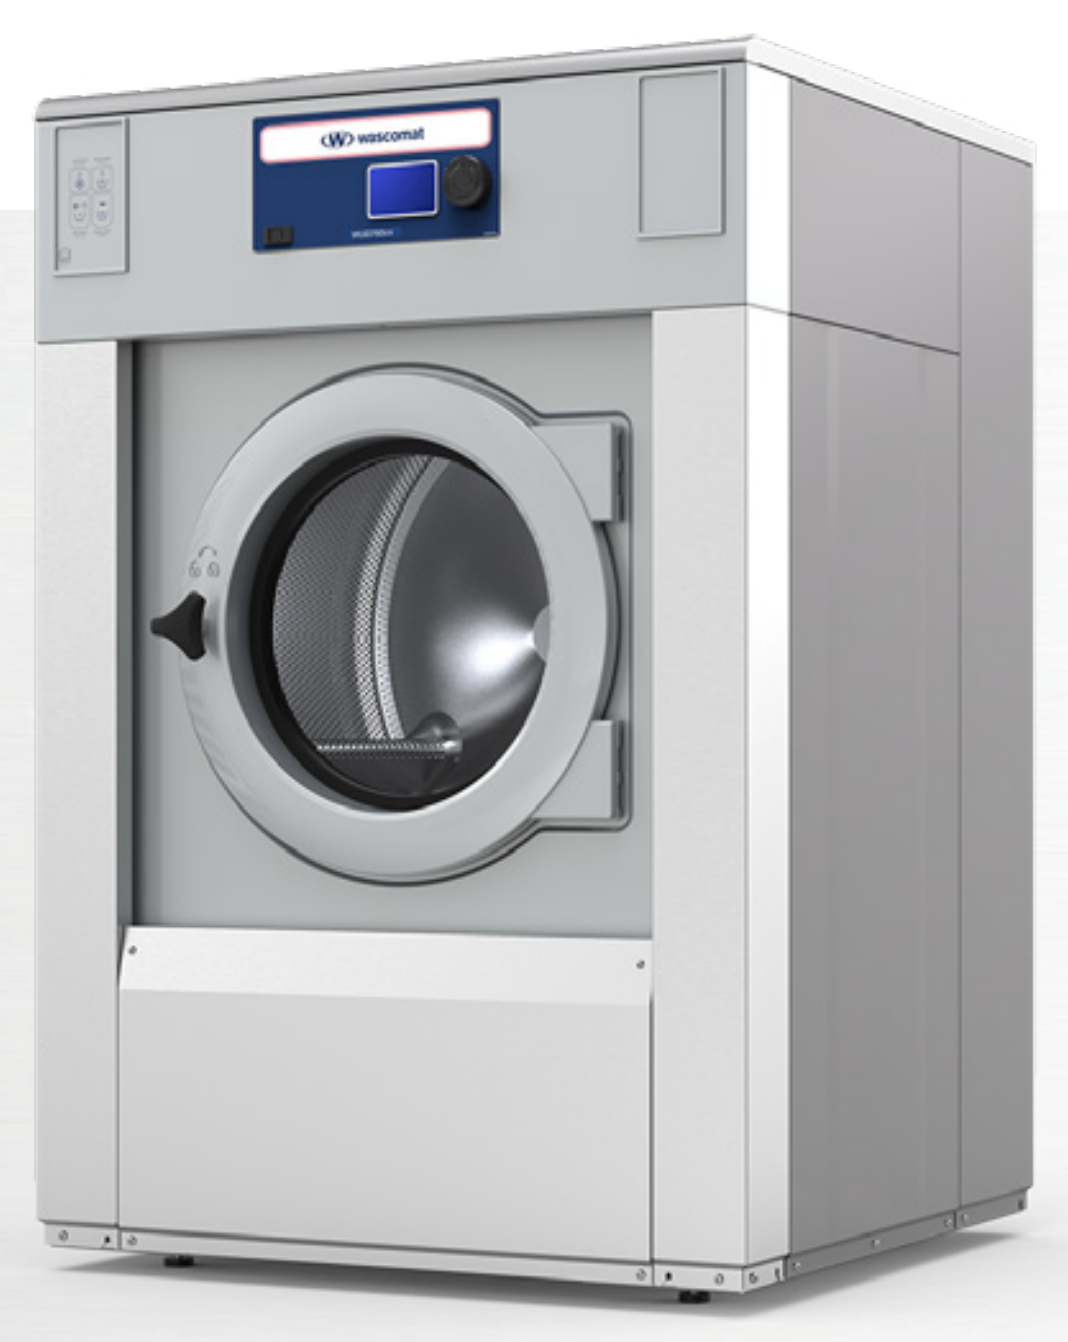 New 2022 Wascomat Wud725 Opl - Cardinal Laundry Equipment Co